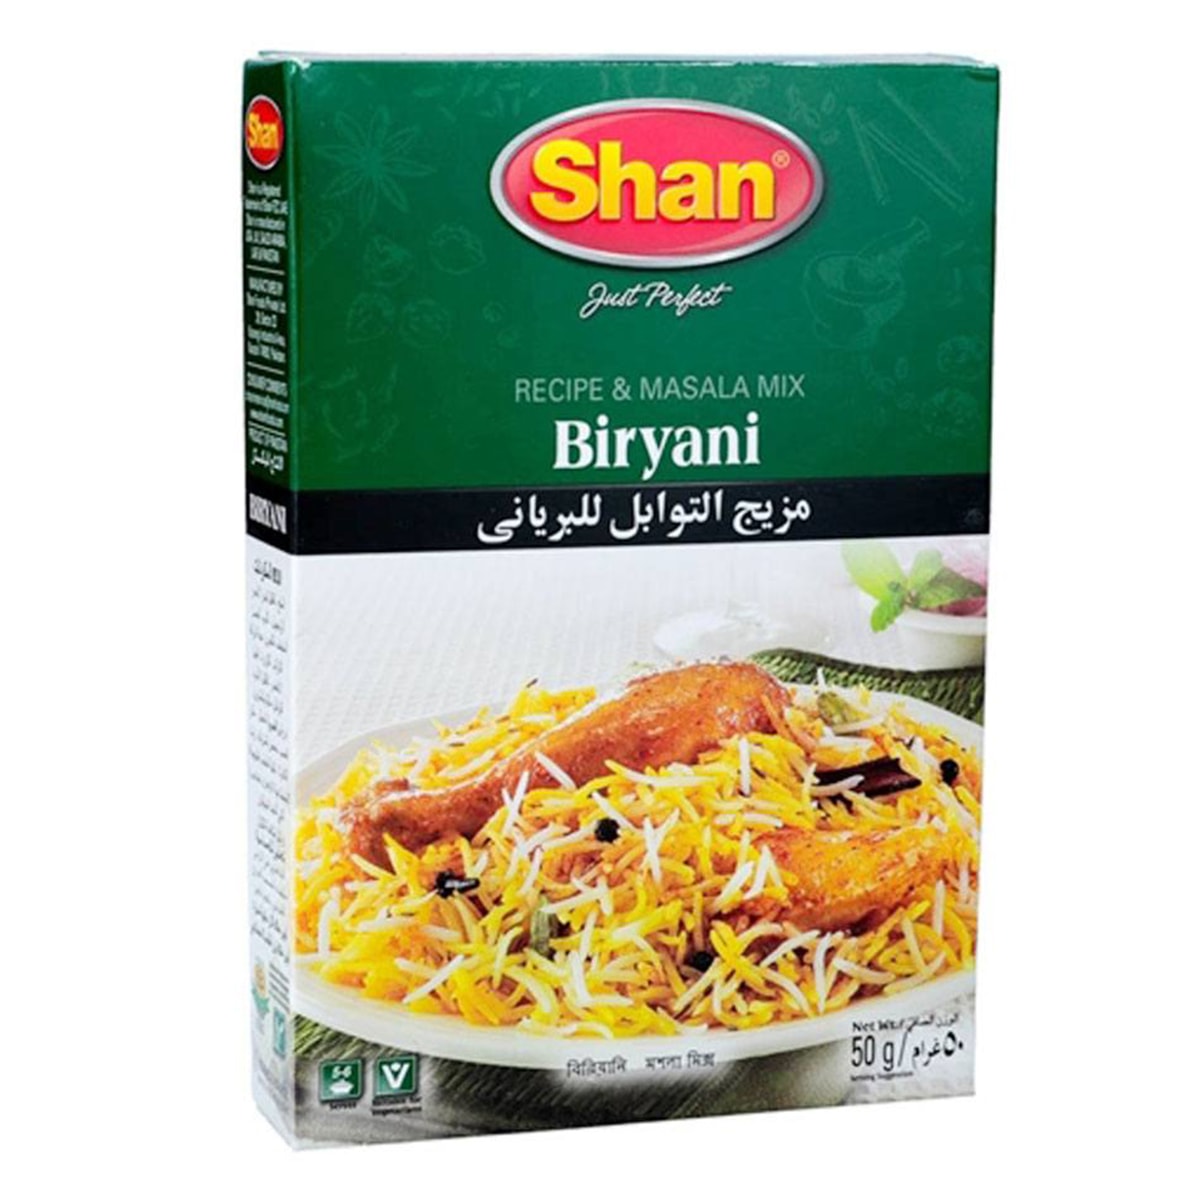 Buy Shan Biryani Masala Mix - 50 gm